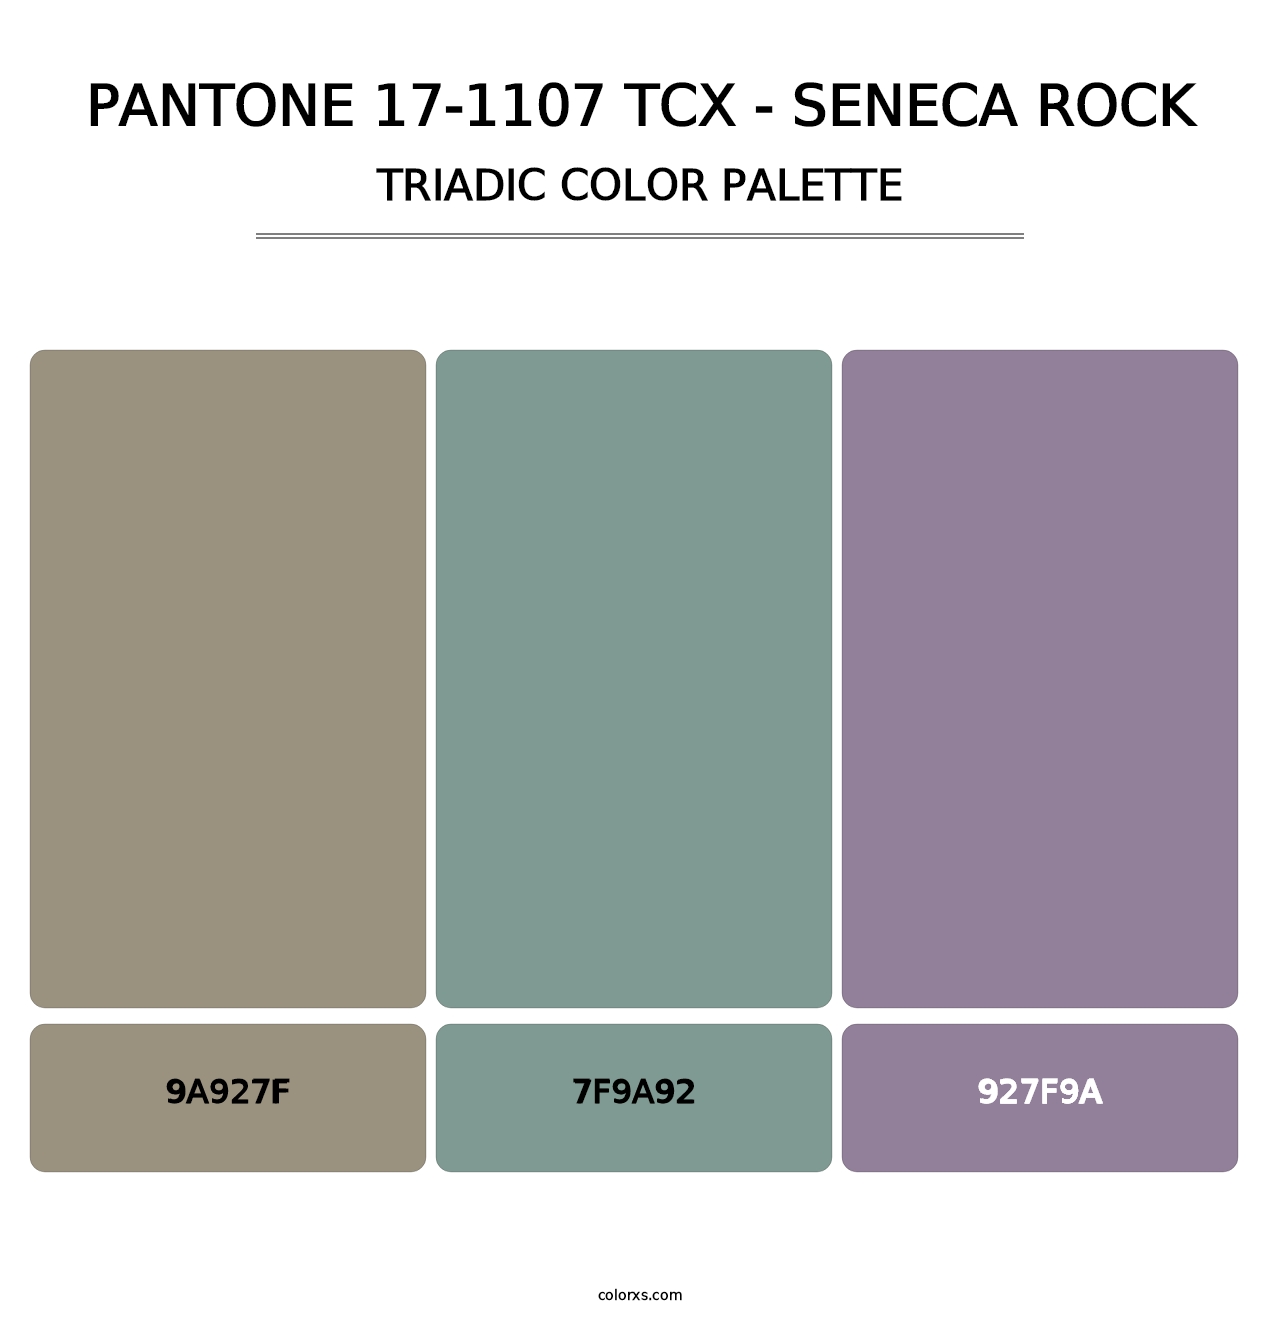 PANTONE 17-1107 TCX - Seneca Rock - Triadic Color Palette